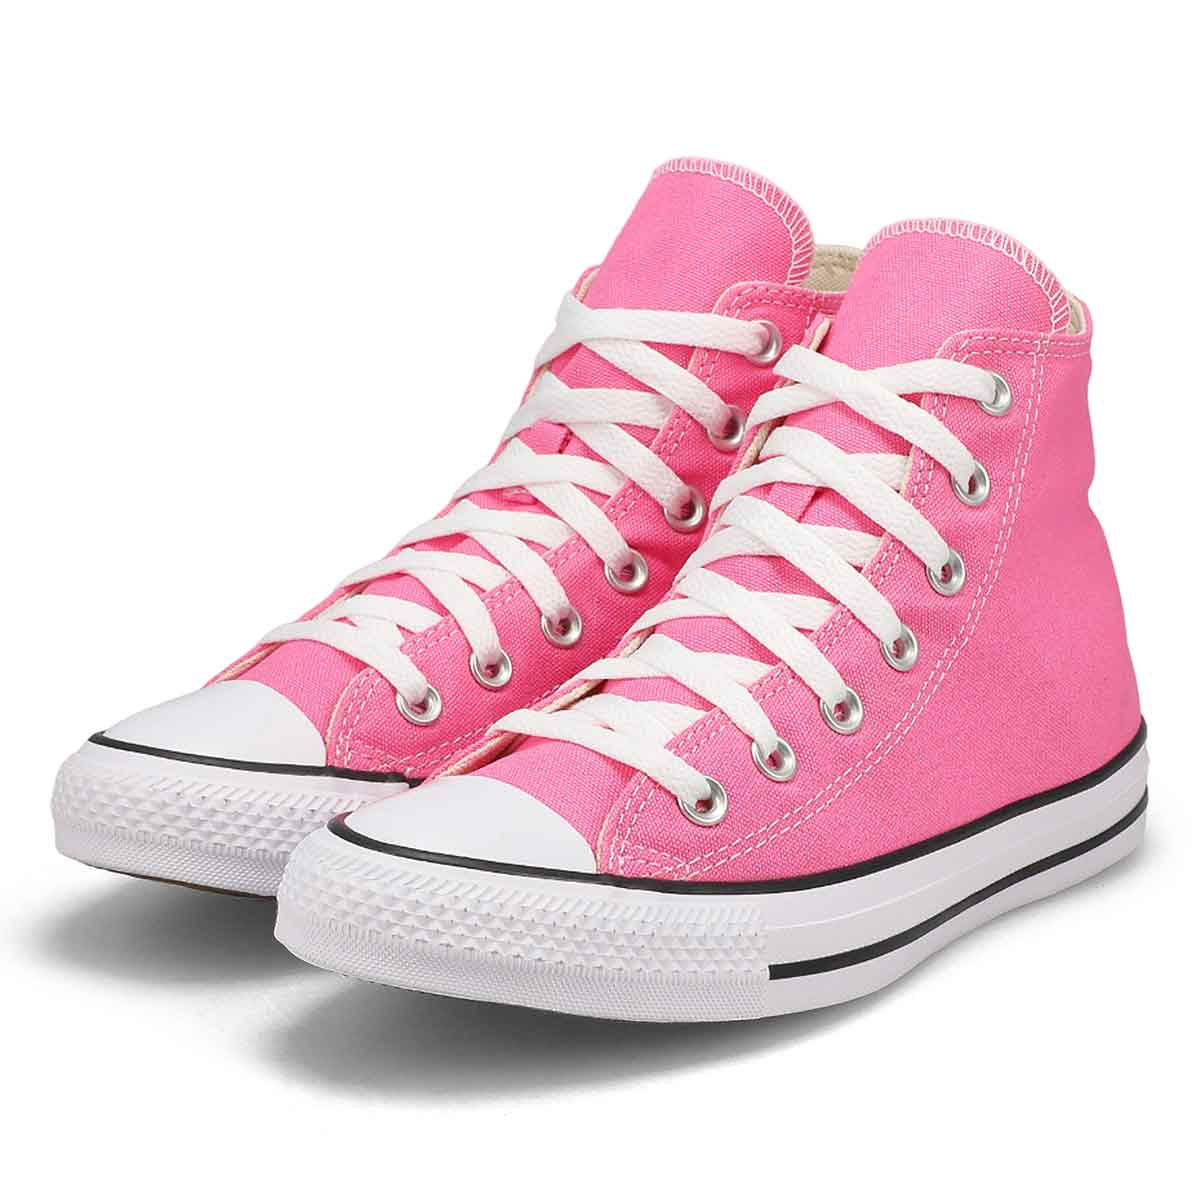 Women's Chuck Taylor All Star Hi Top Sneaker - Pink